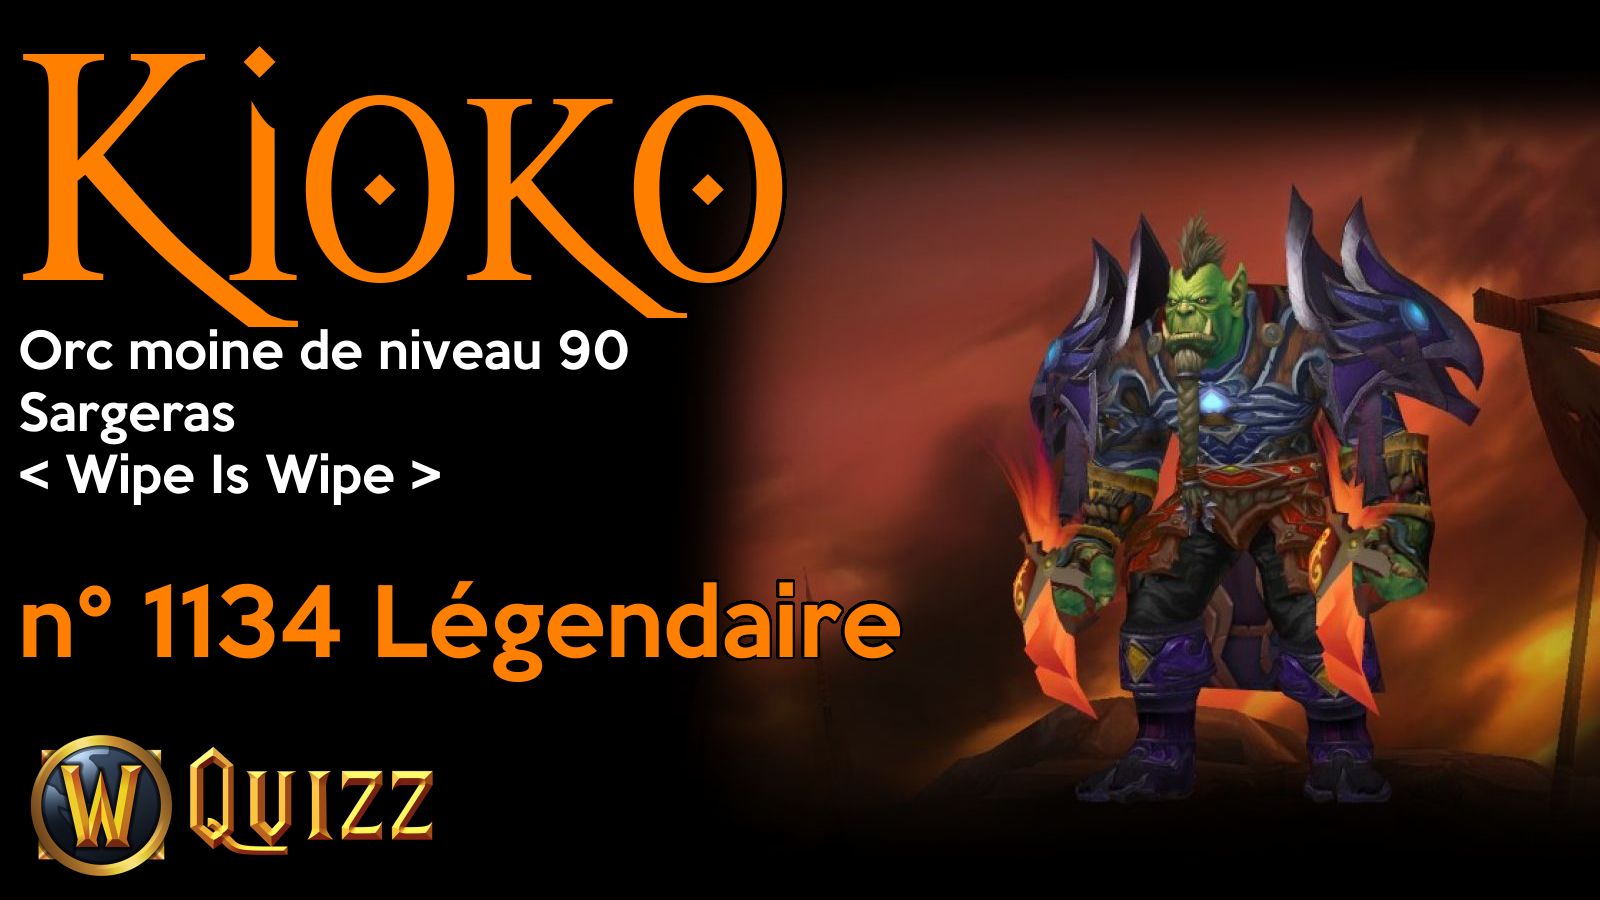 Kioko, Orc moine de niveau 90, Sargeras